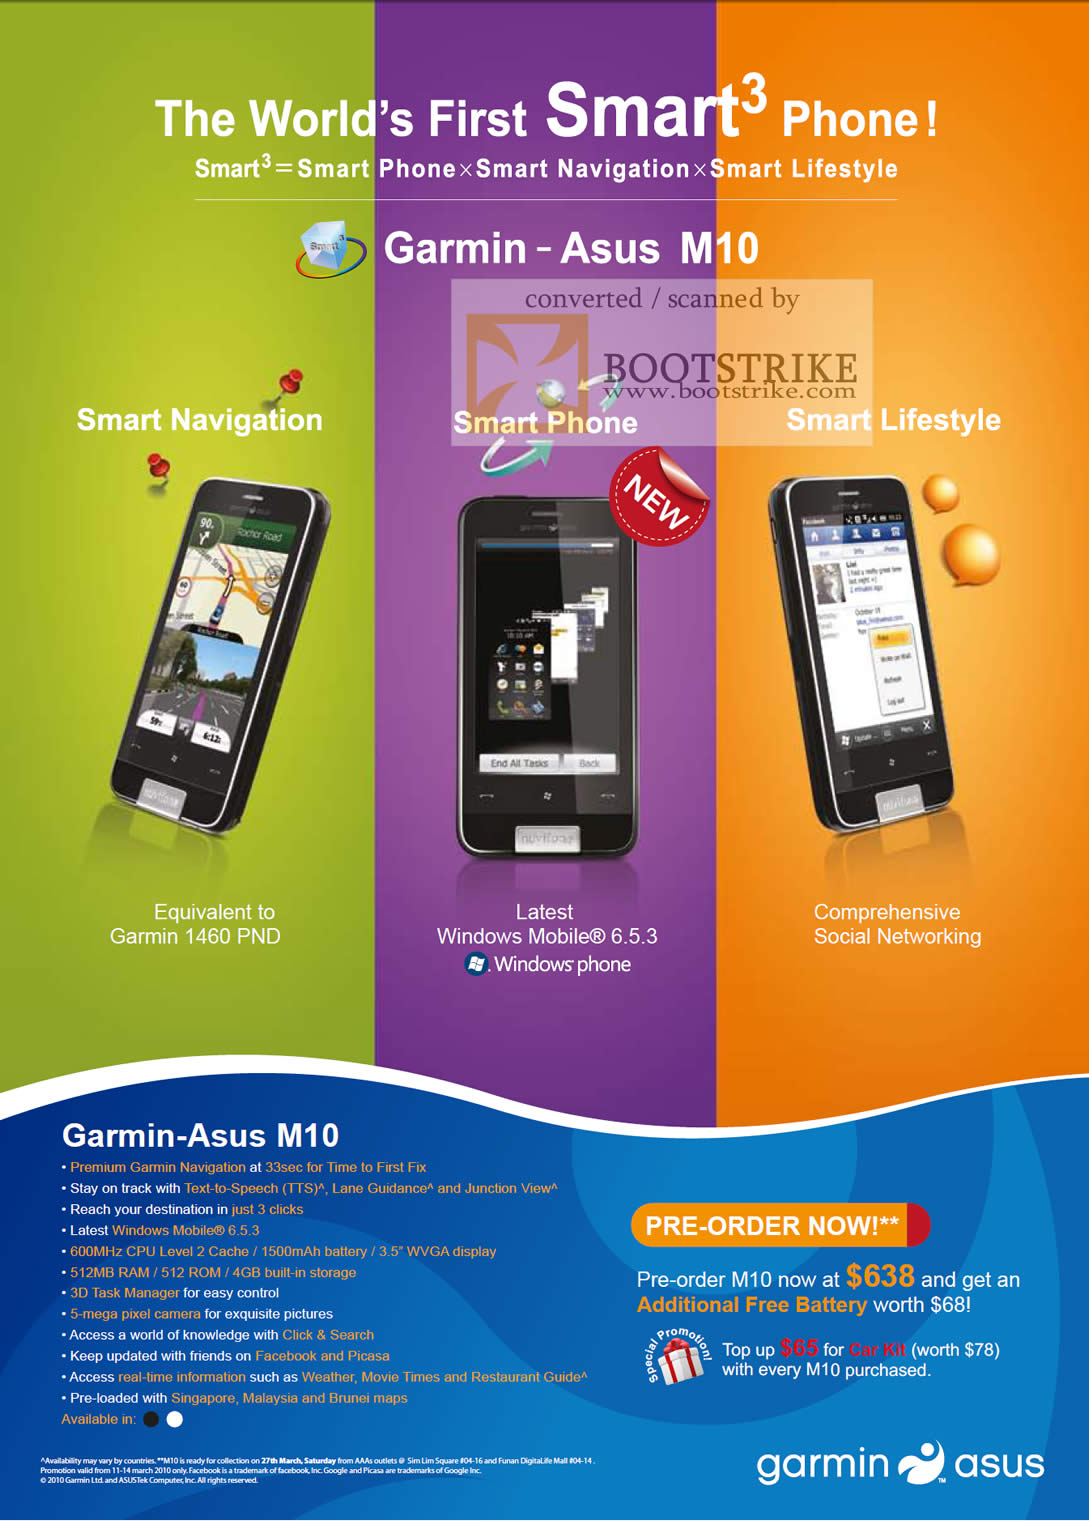 Garmin M10 IT SHOW 2010 Price List Brochure Flyer Image